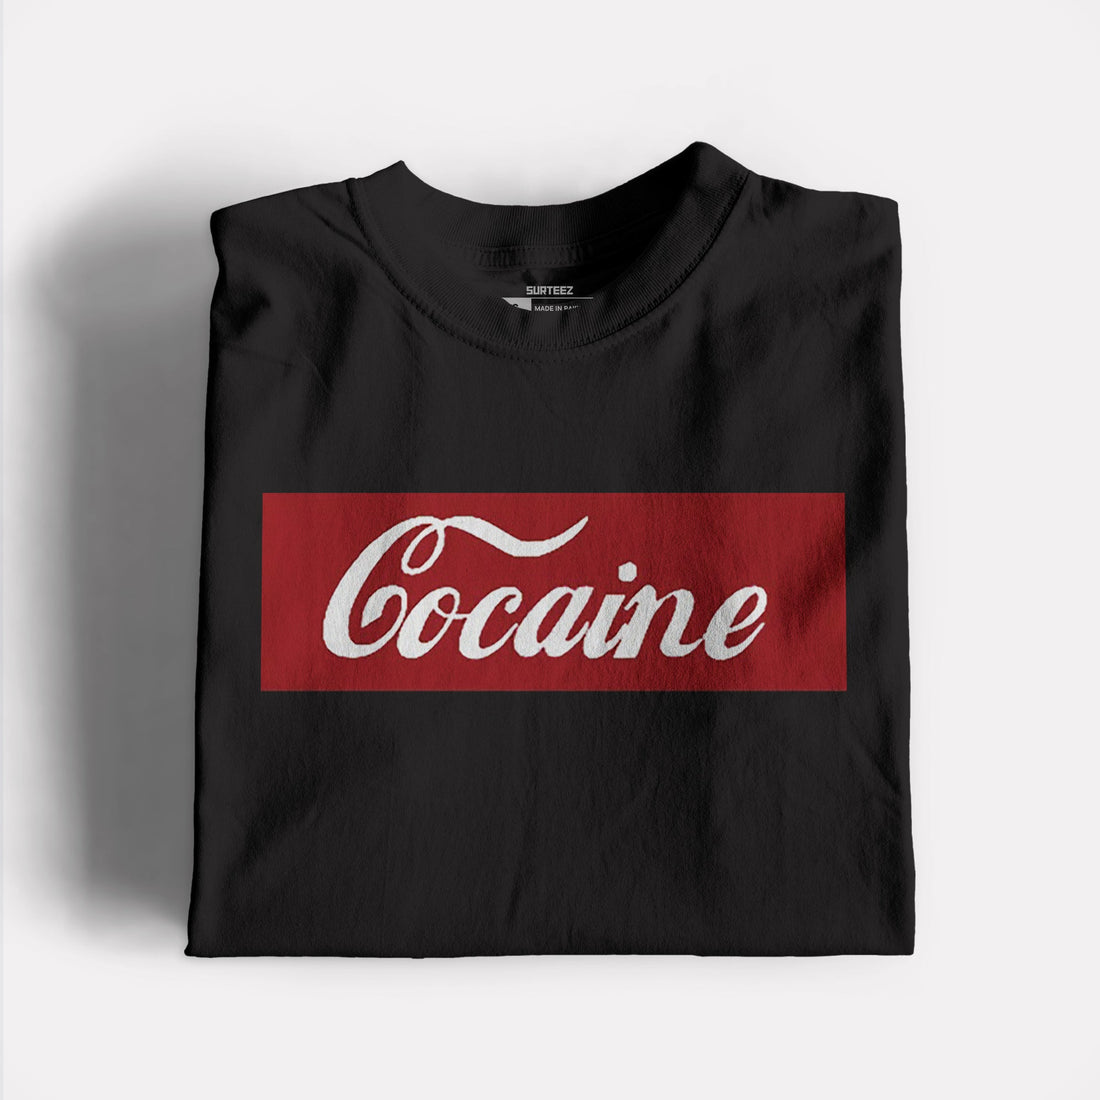 Cocaine Graphic Tshirt